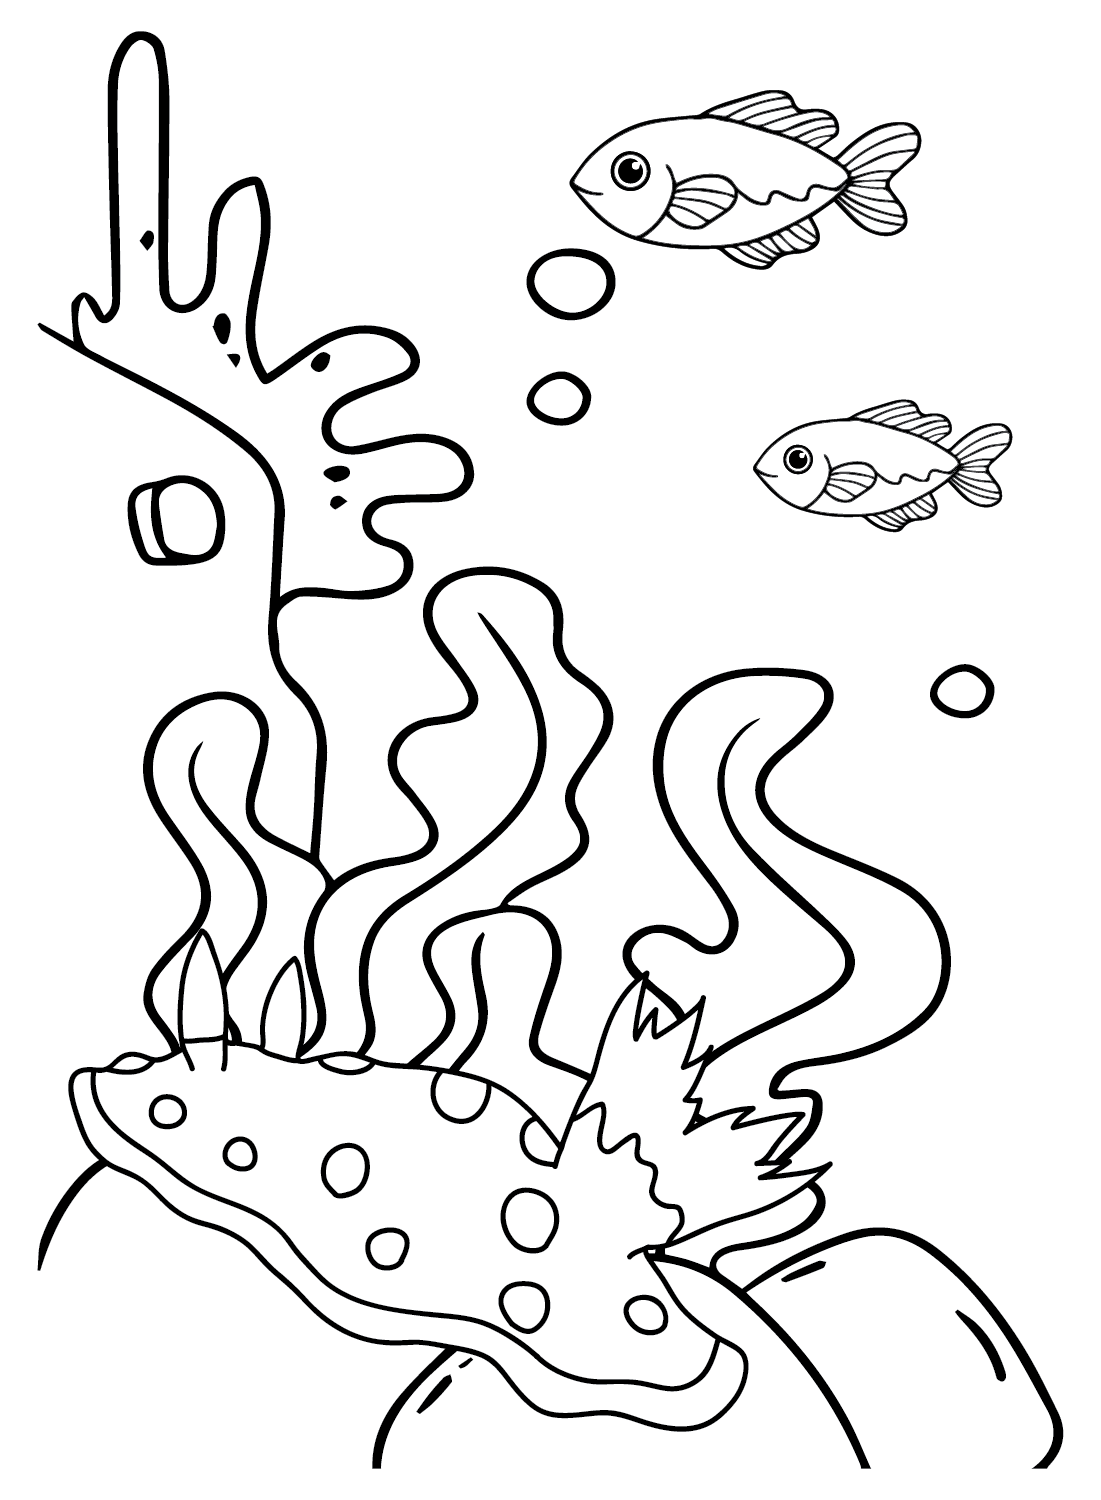 Sea Slug color Sheets from Sea Slug